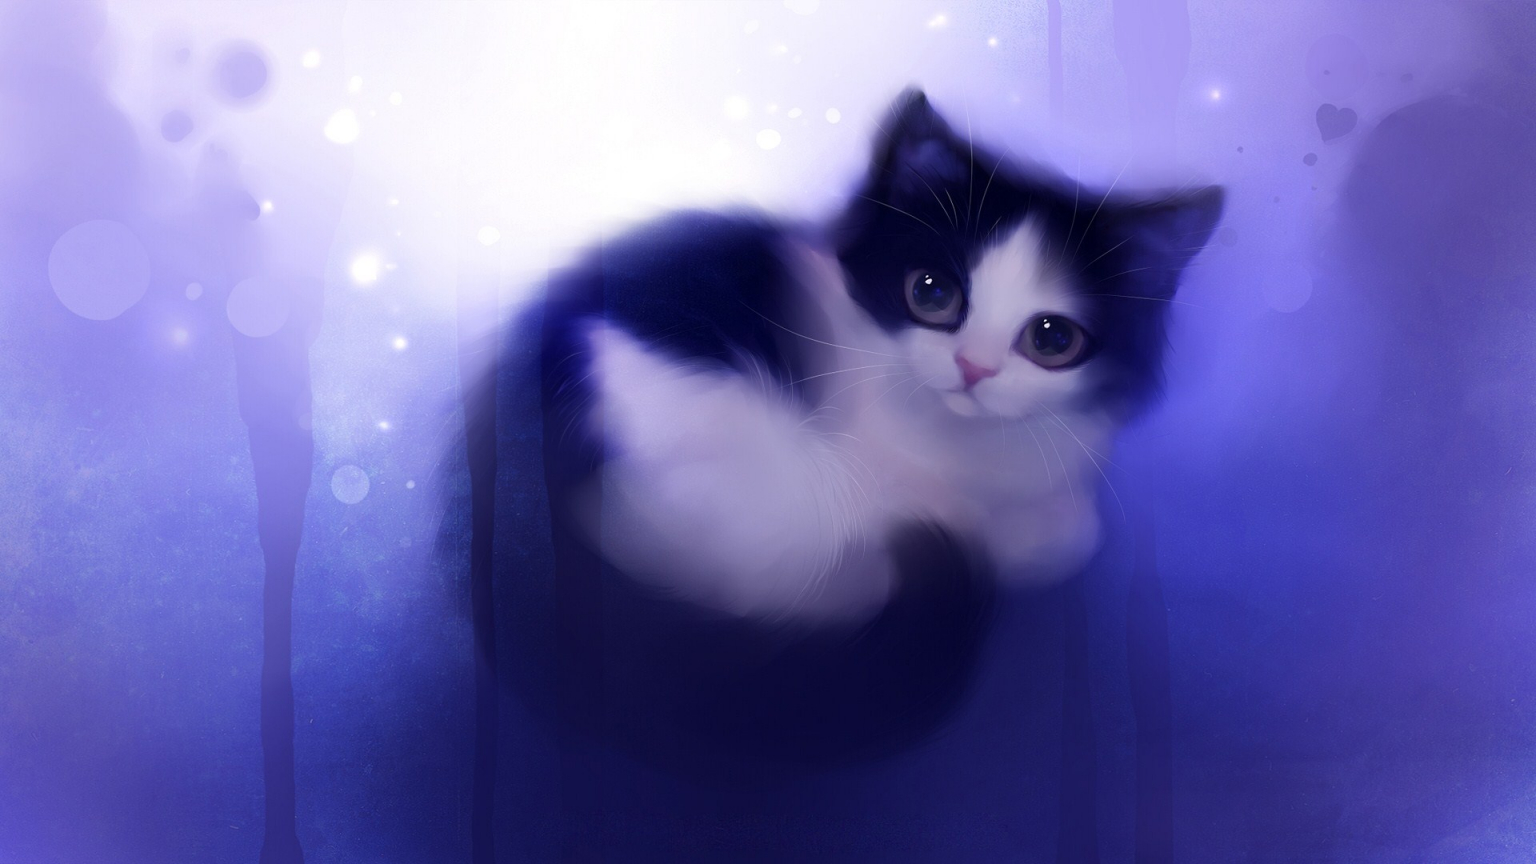 Free download Pics Photo Cute Cat Wallpaper [1920x1080] for your Desktop, Mobile & Tablet. Explore Cute Cat Wallpaper. Cute Kitten Wallpaper, Kitten Desktop Wallpaper, Kitten Wallpaper Free Download